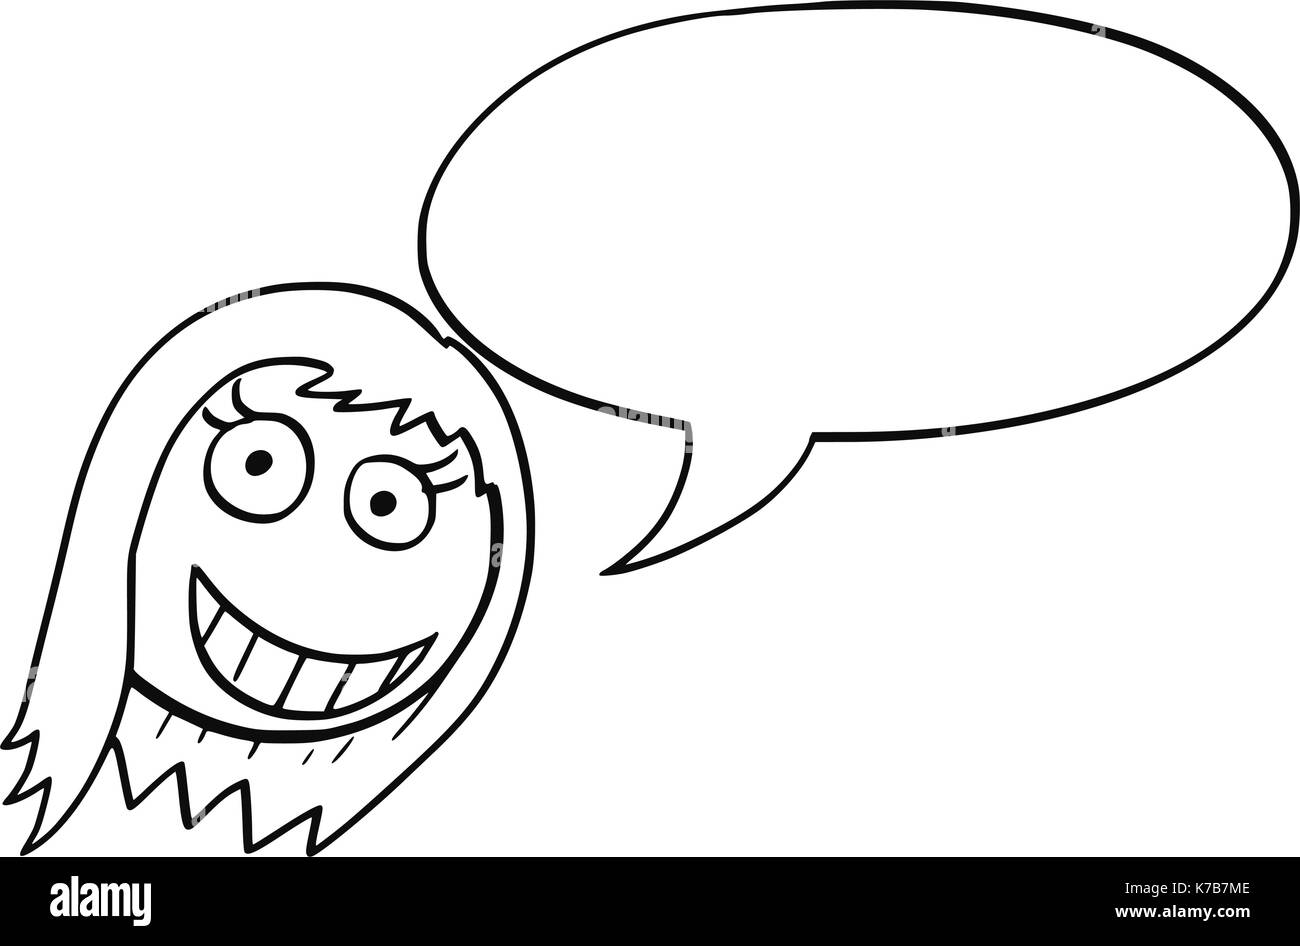 Cartoon illustration of smiling woman female head with empty text speech bubble balloon. Stock Vector